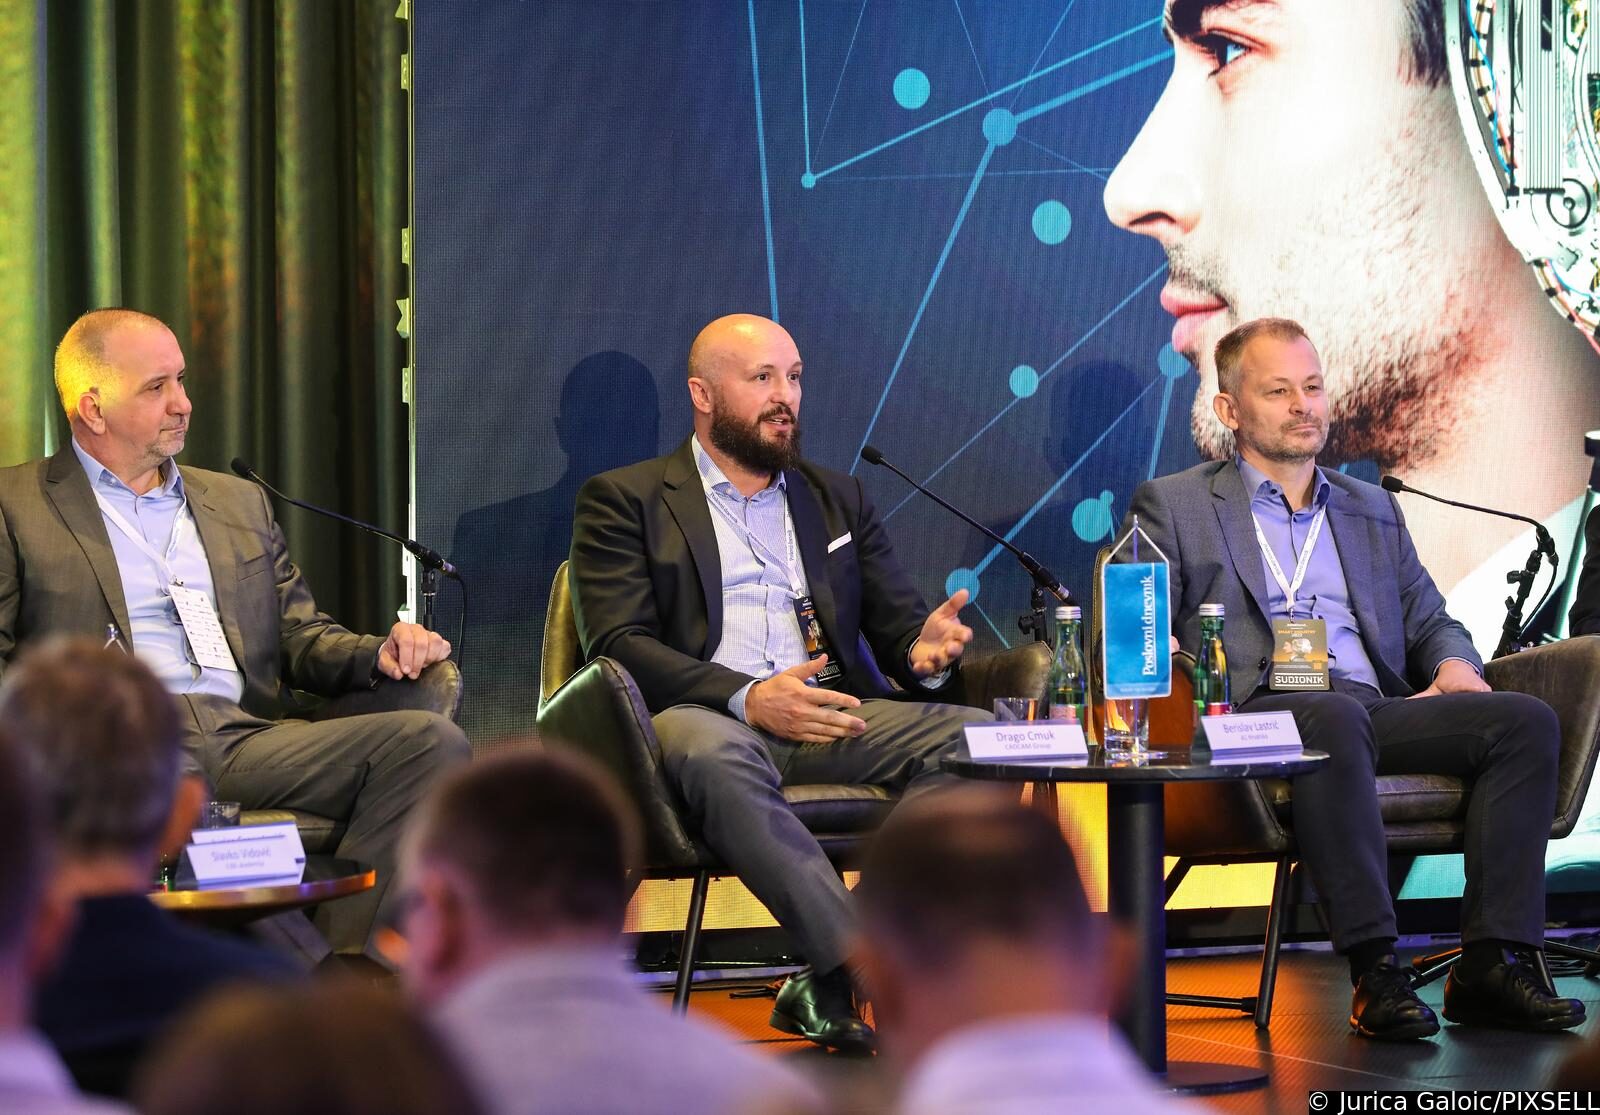 Zagreb: Konferencija Smart industry, panel: Iz horizontale u vertikalu